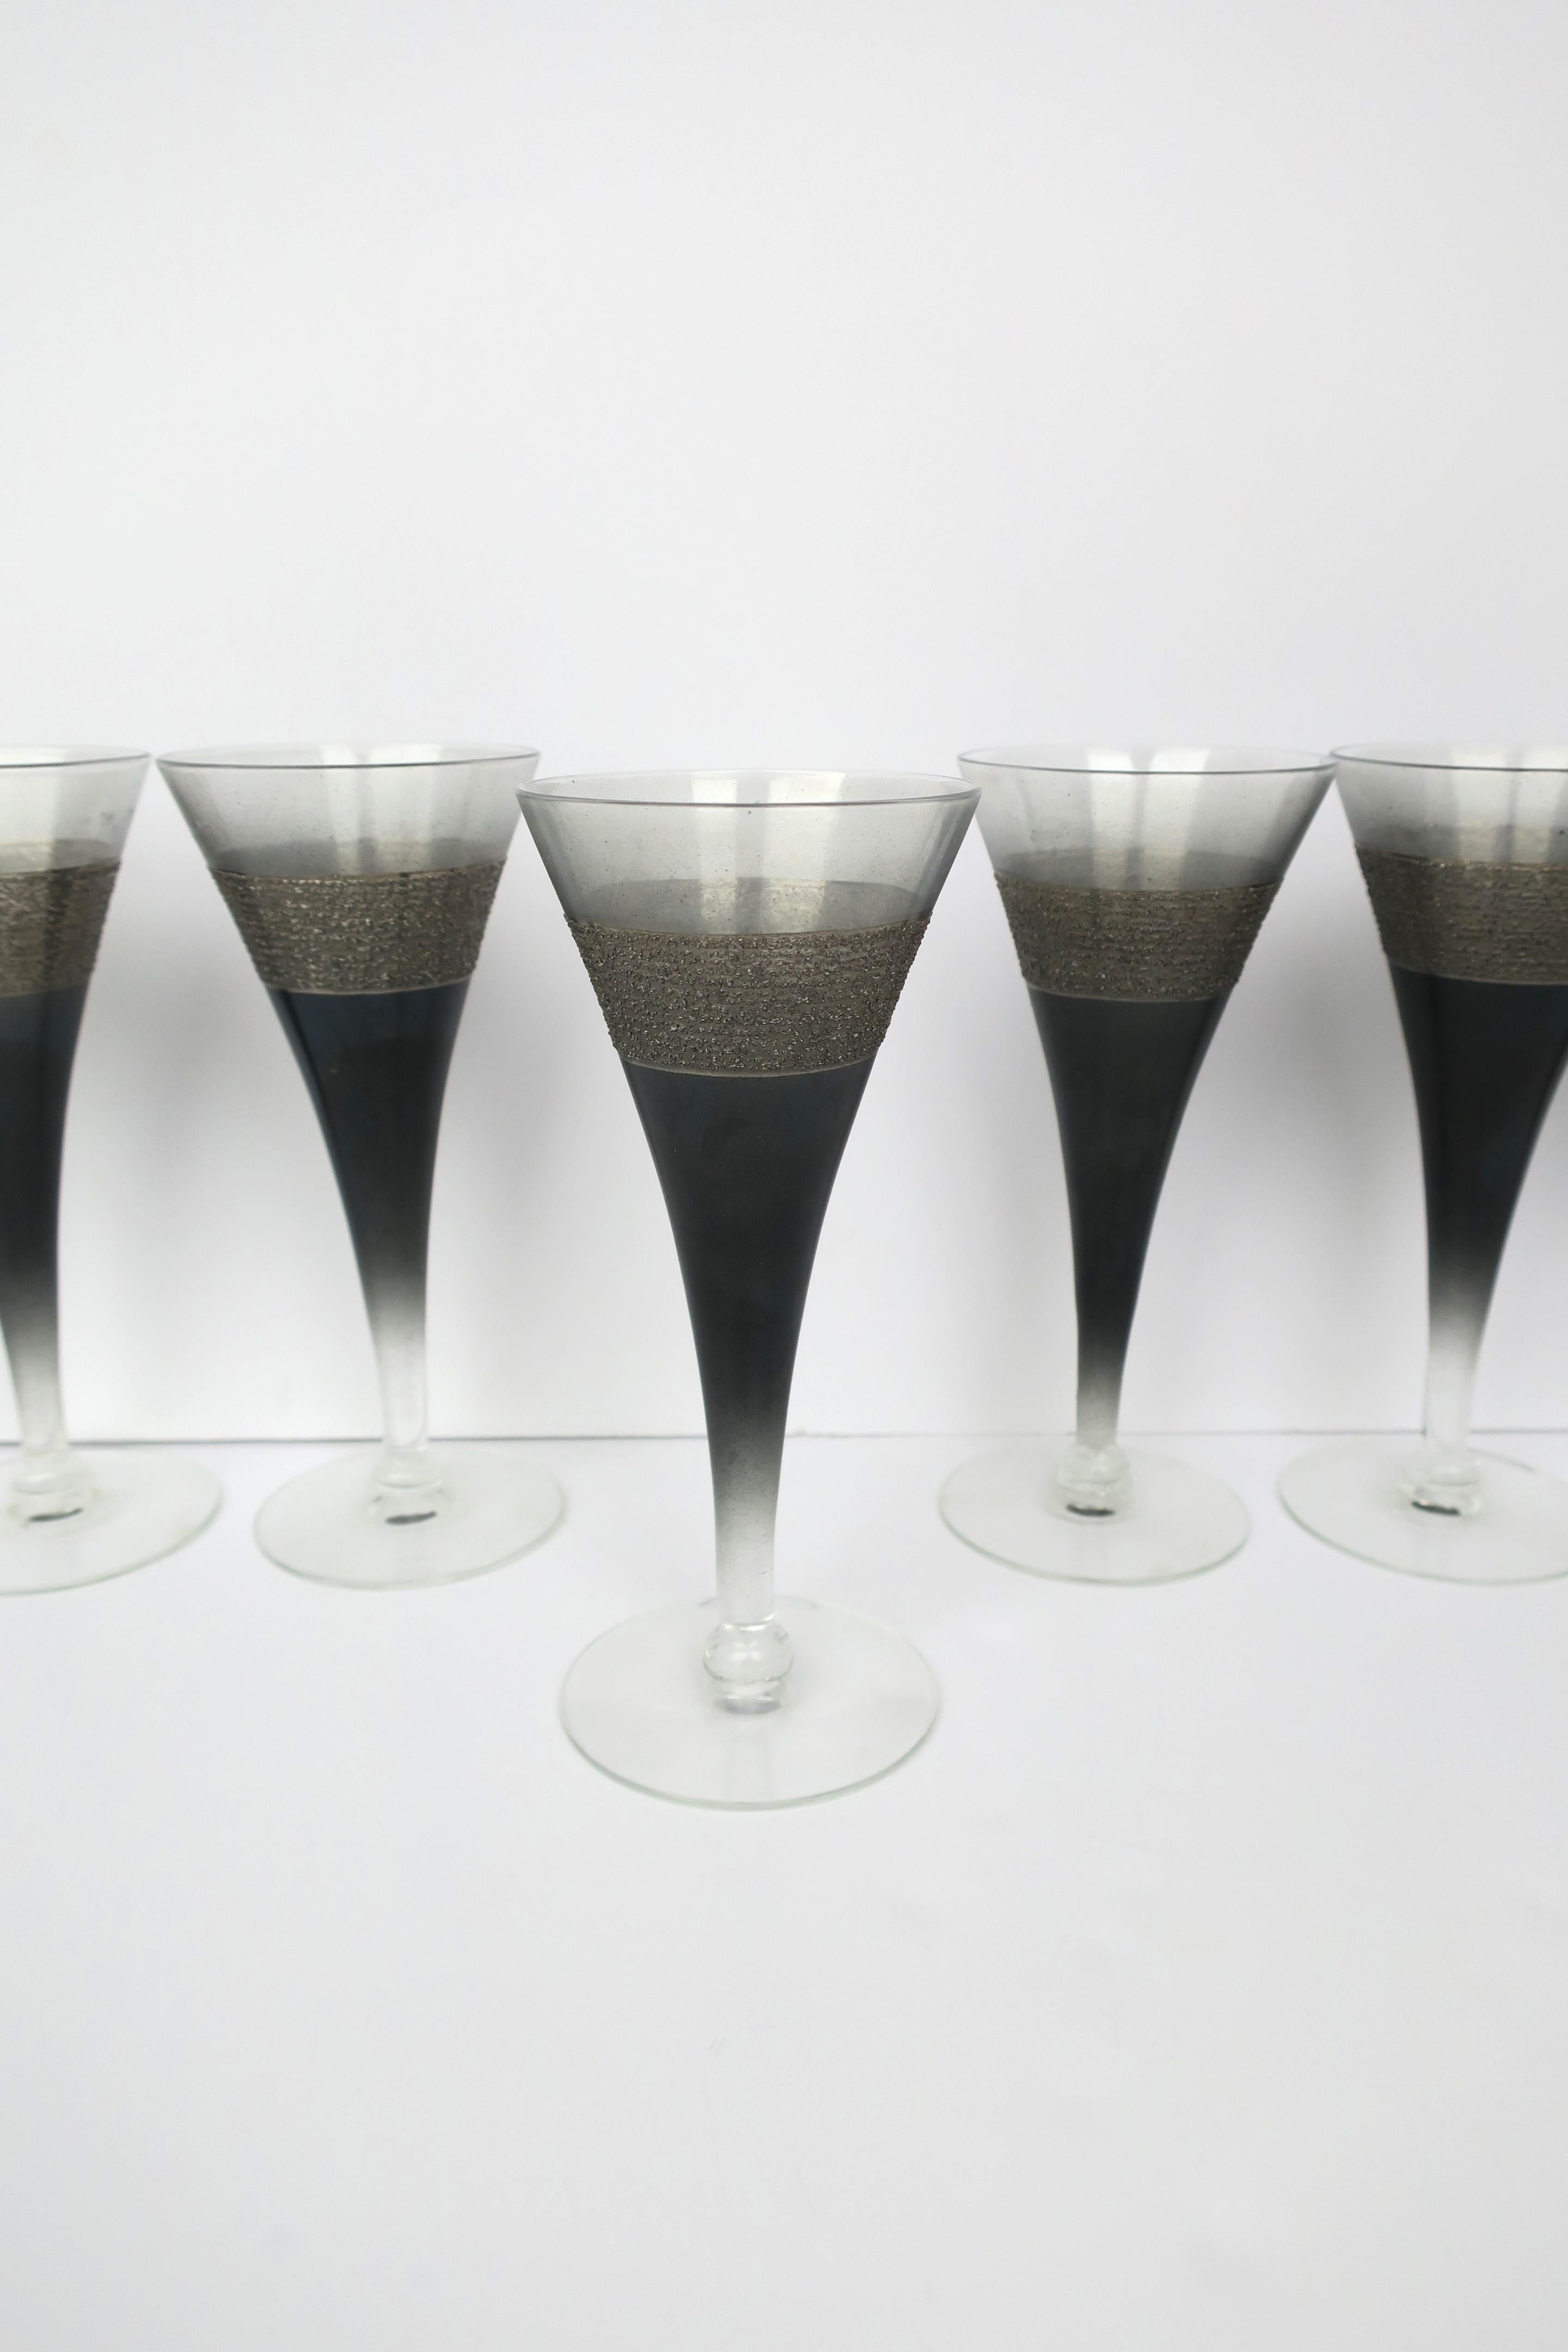 Mid-20th Century Champagne Flutes Glasses in Black & Silver, circa 1960s For Sale